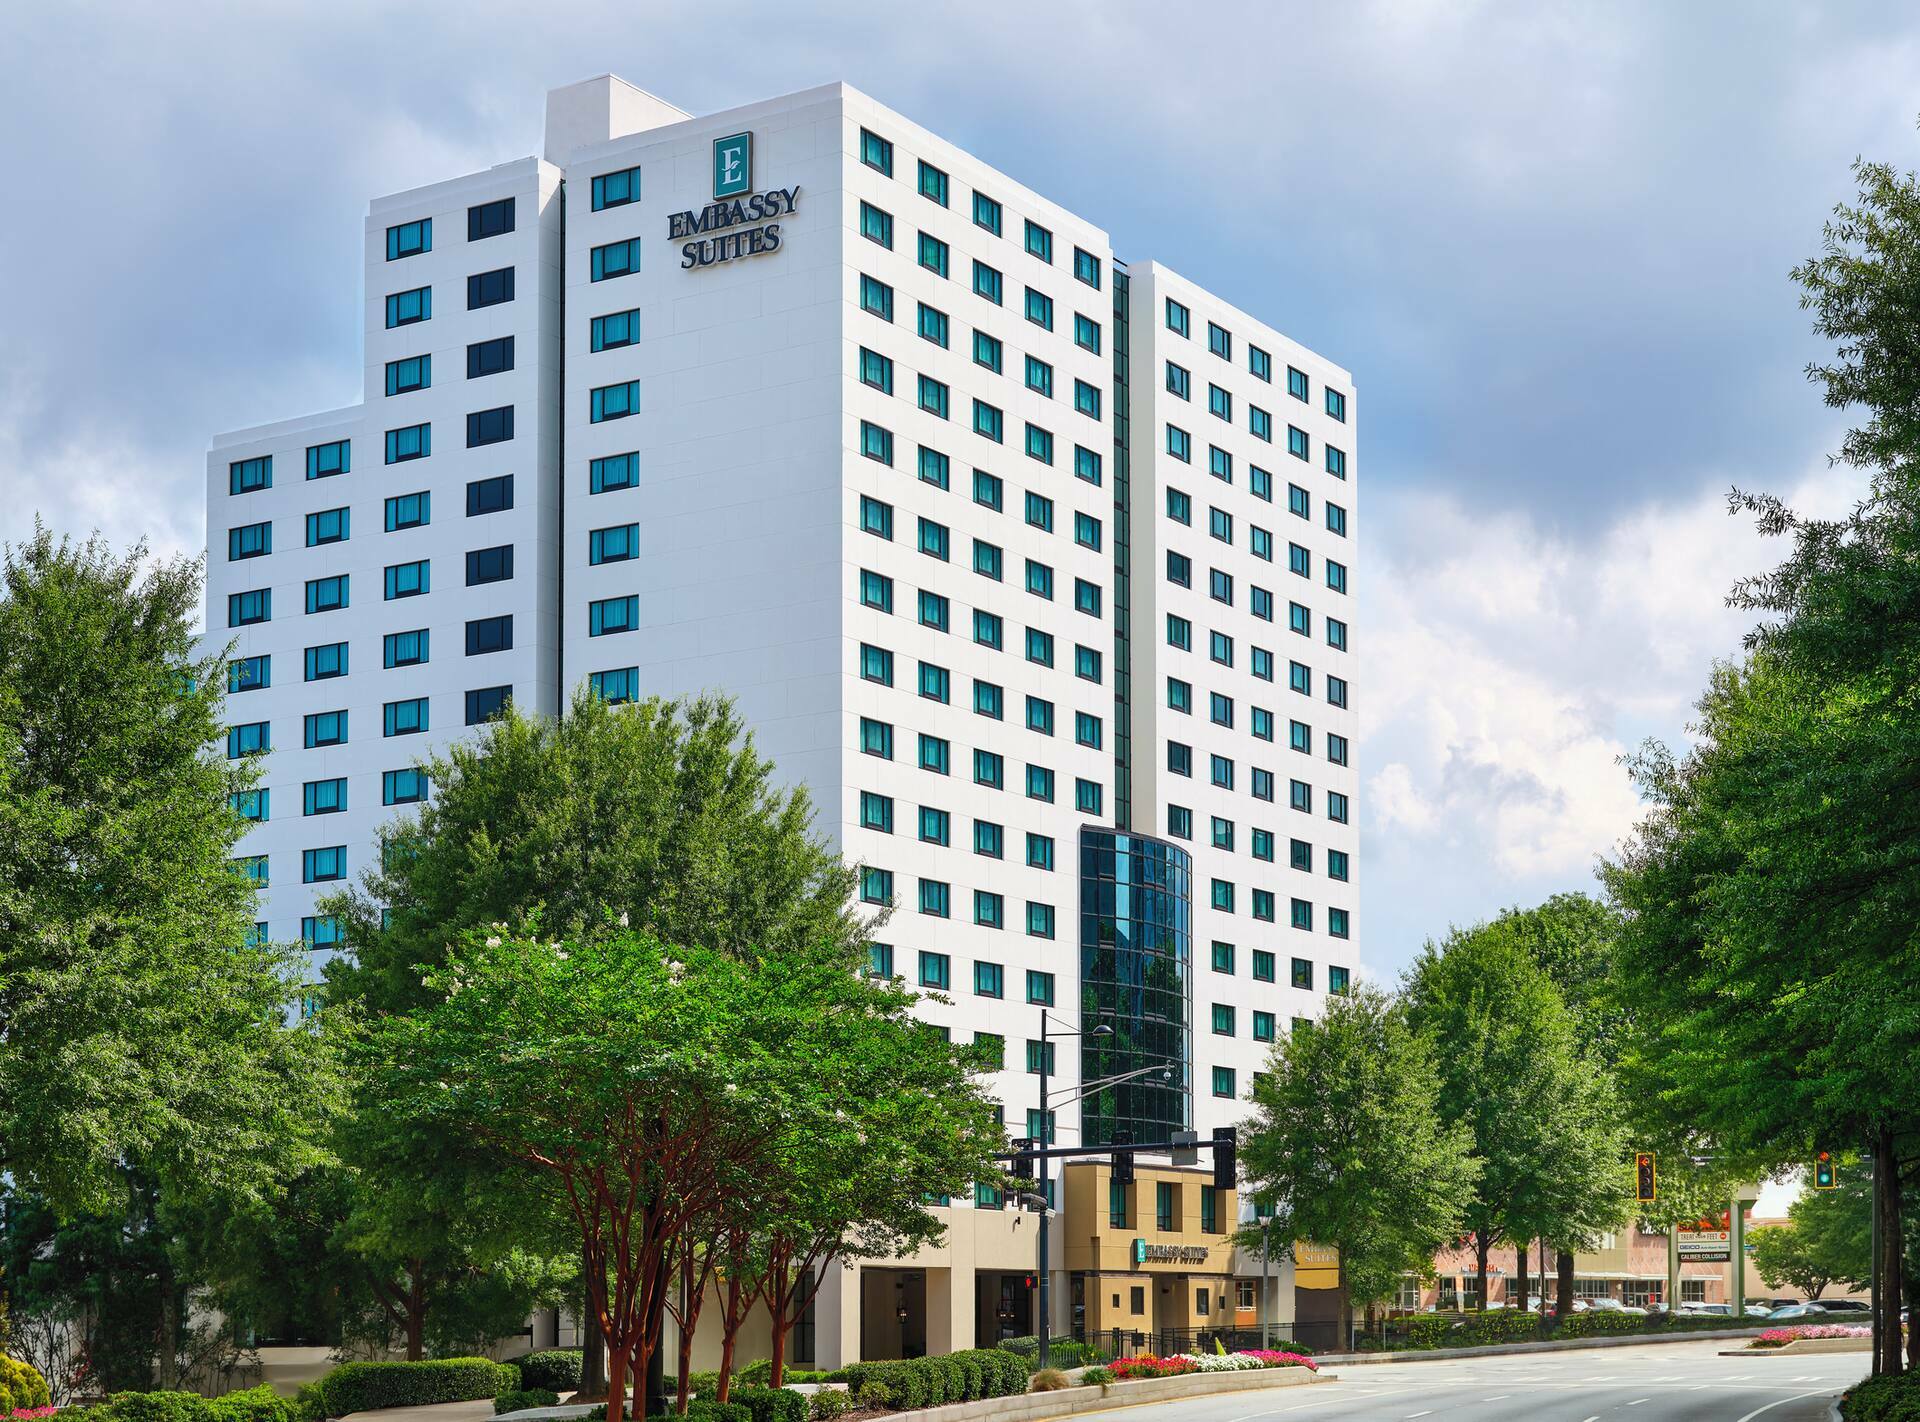 Photo of Embassy Suites by Hilton Atlanta Buckhead, Atlanta, GA